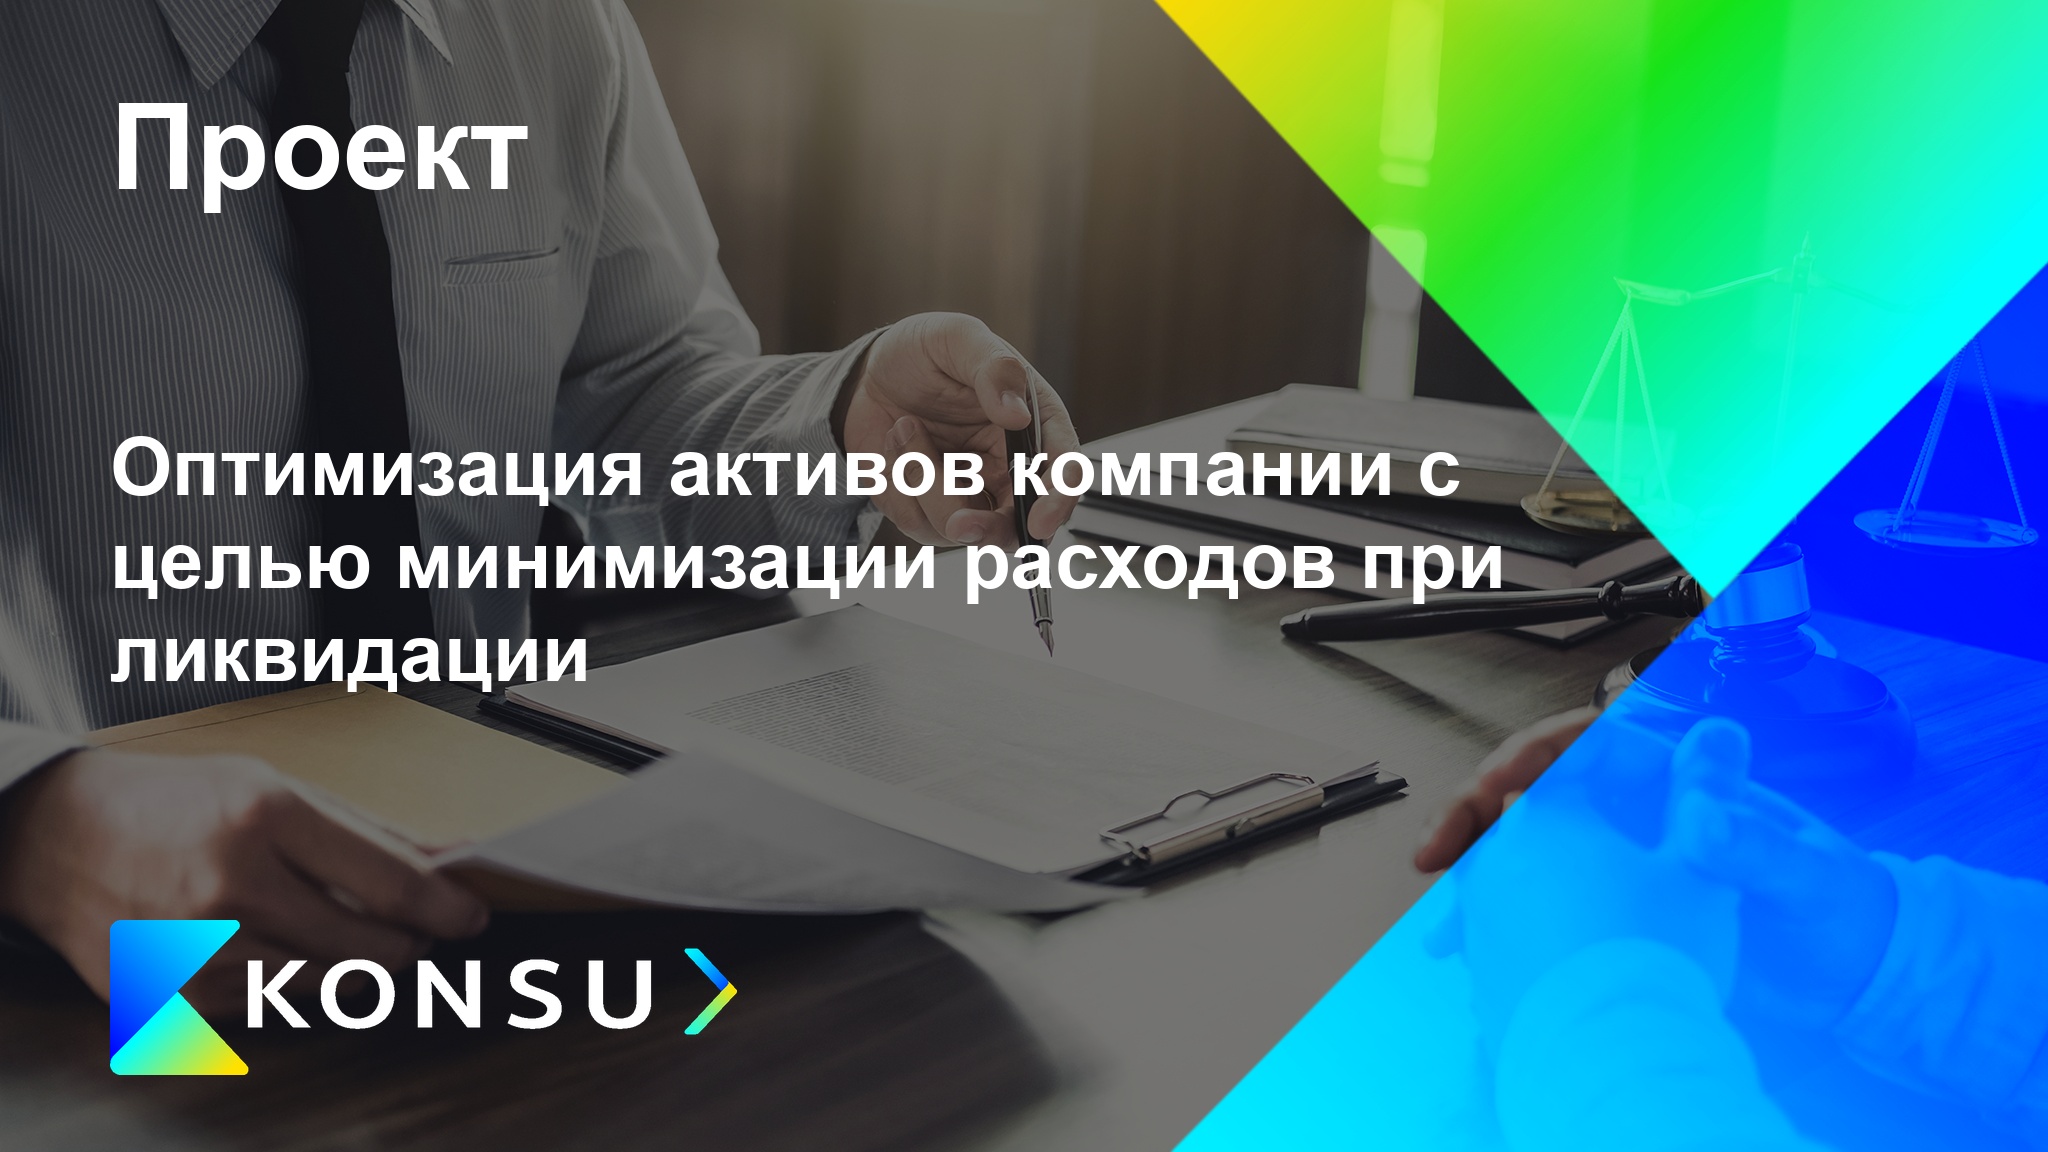 Optimizatsija aktivov kompanii tselju minimizatsii ru konsu outs (2)